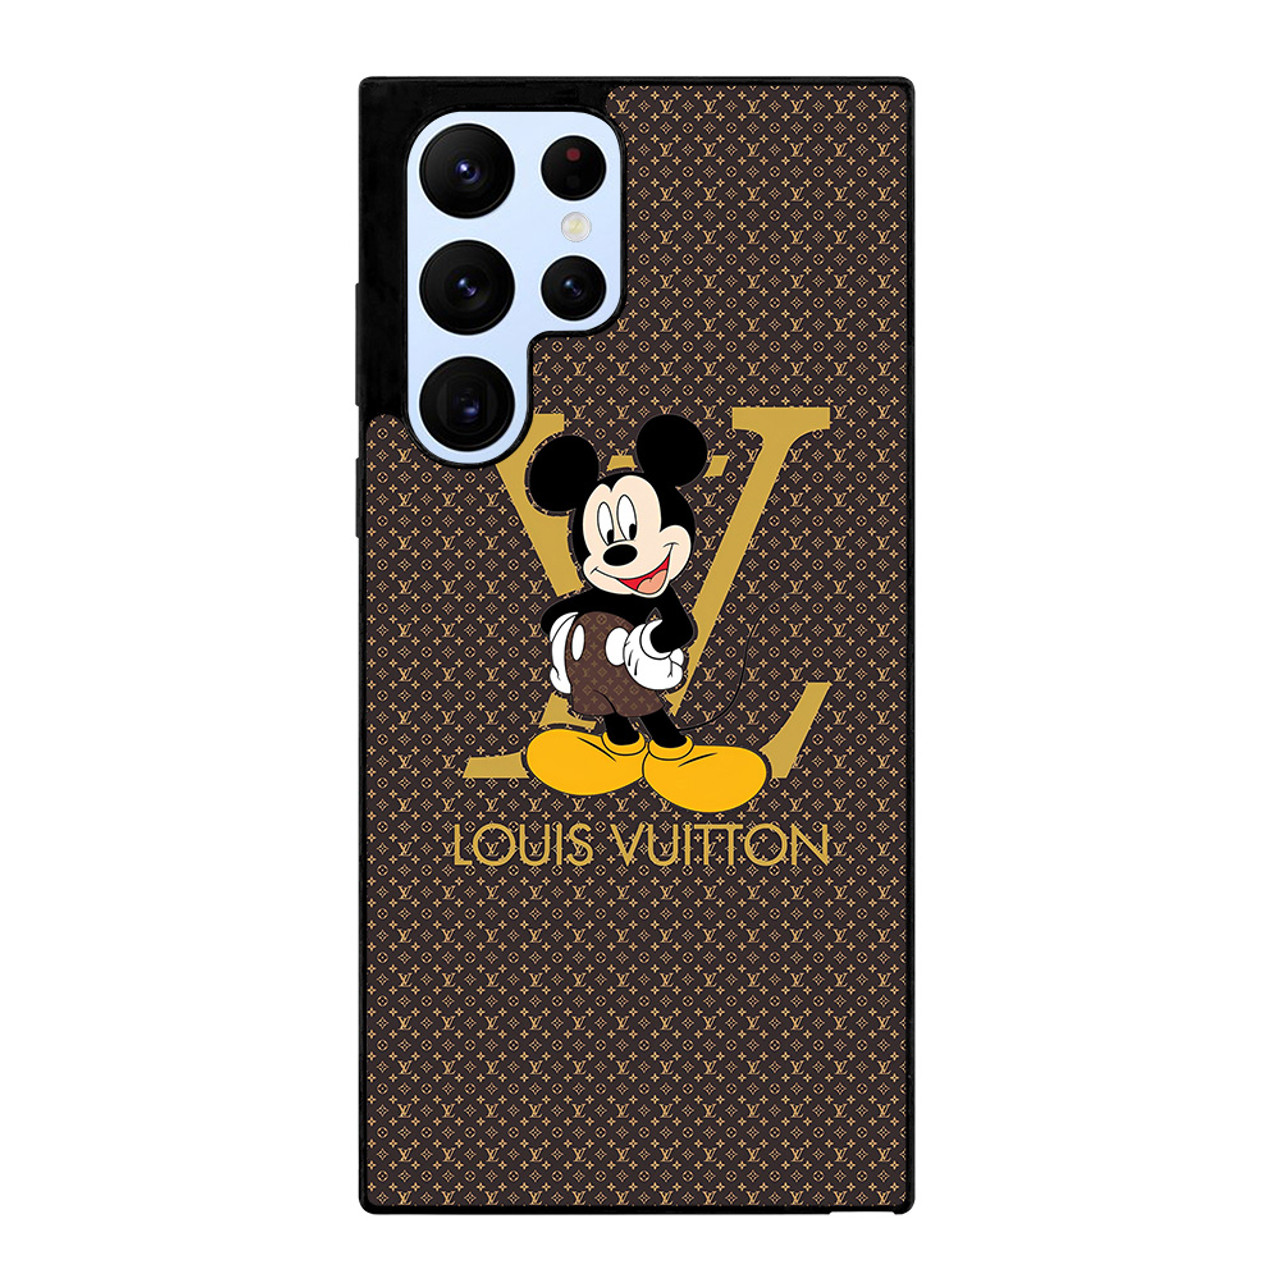 LOUIS VUITTON LV MICKEY MOUSE Samsung Galaxy S22 Ultra Case Cover